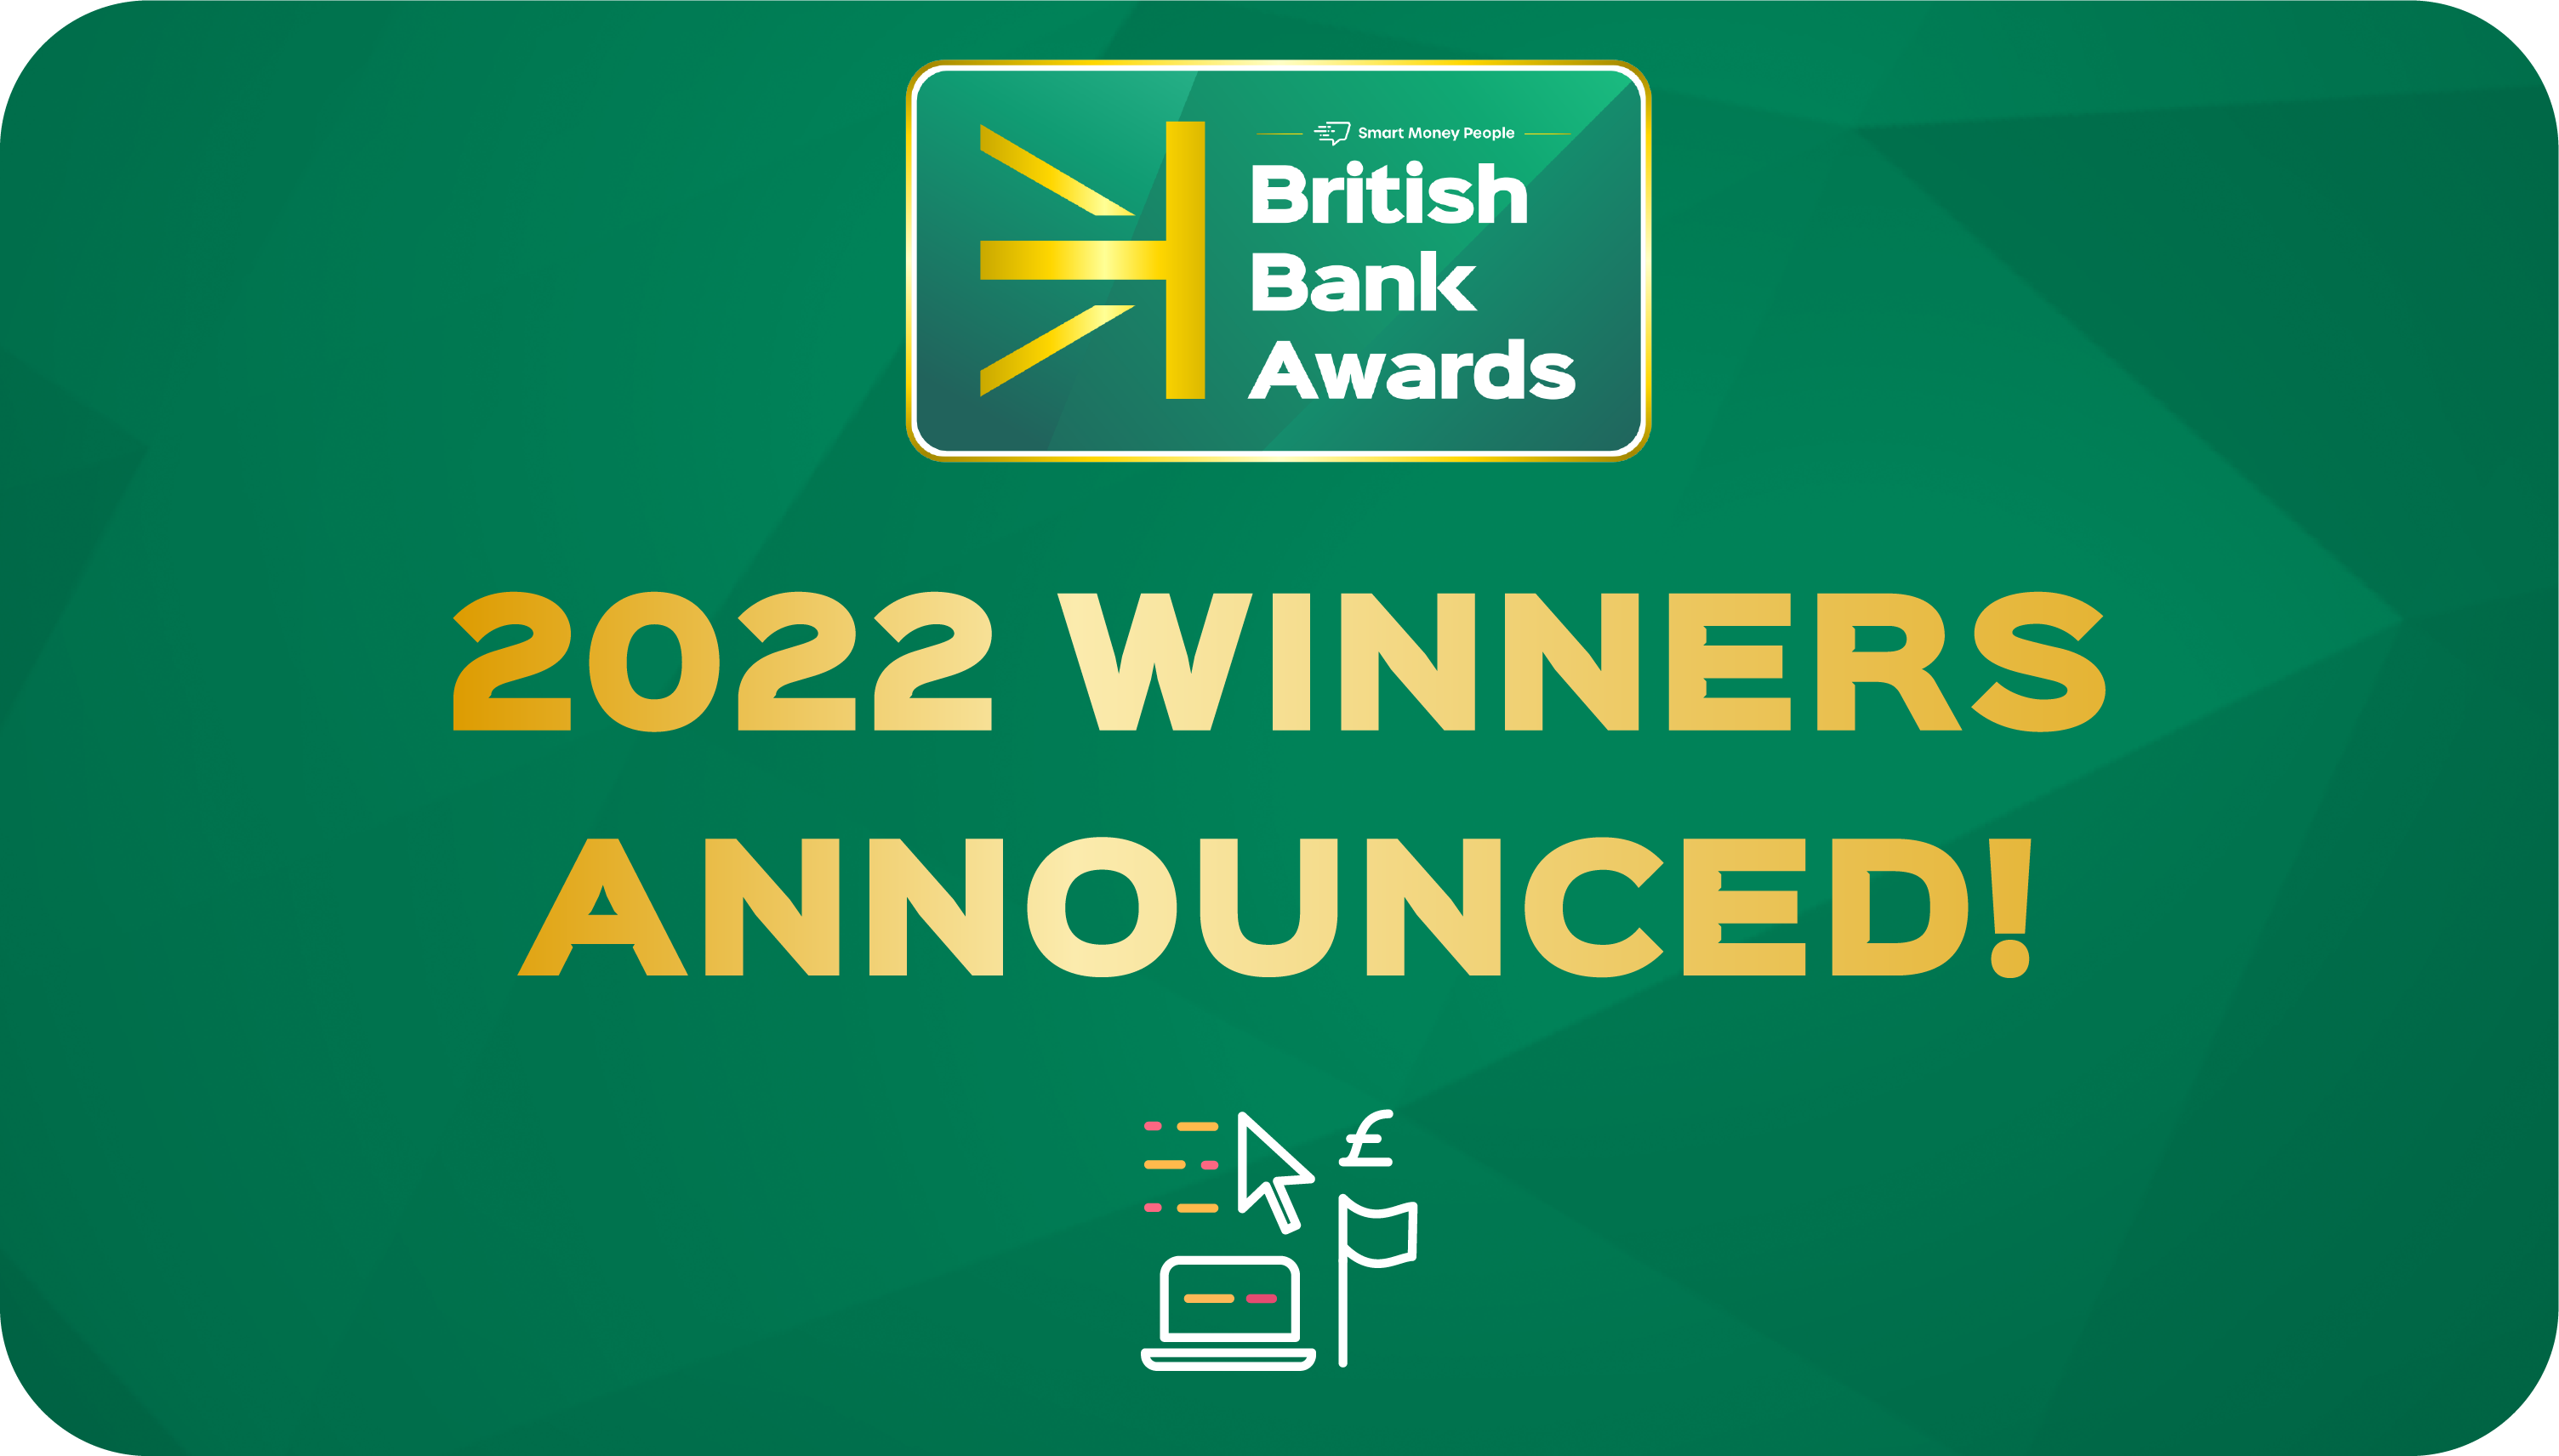 British Bank Awards 2022 winners revealed!